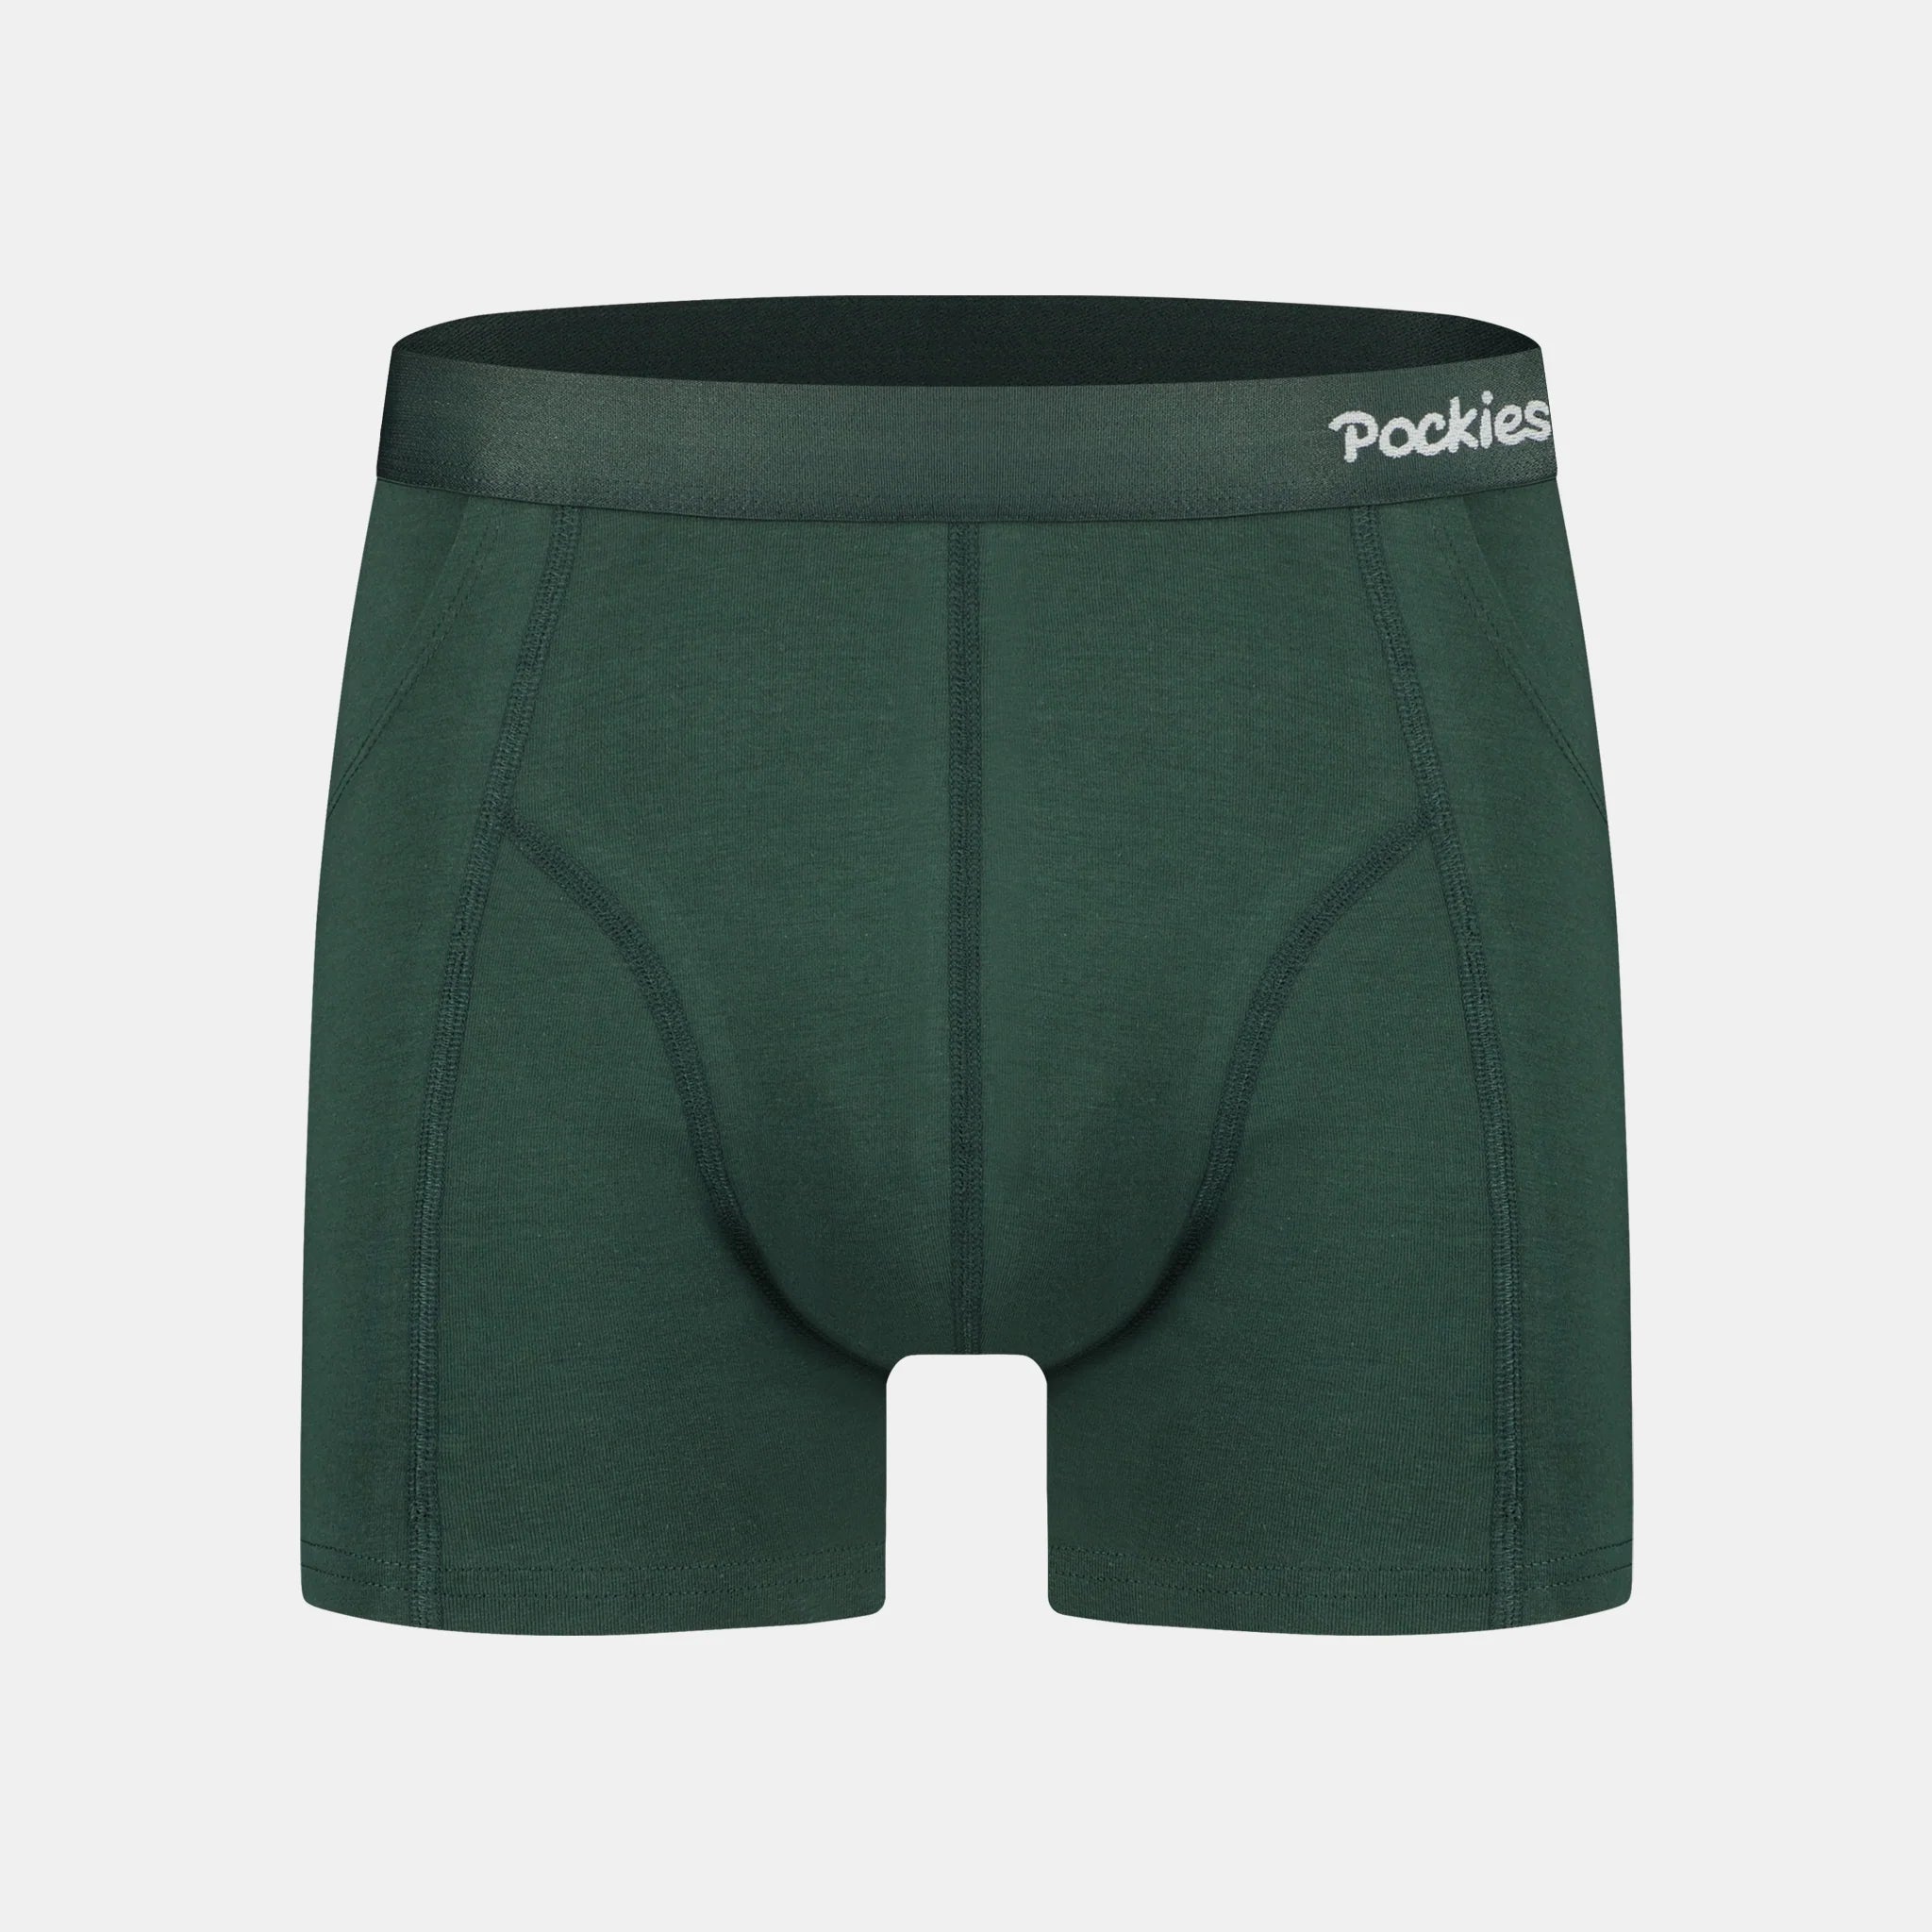 Pockies Boxer Briefs Green